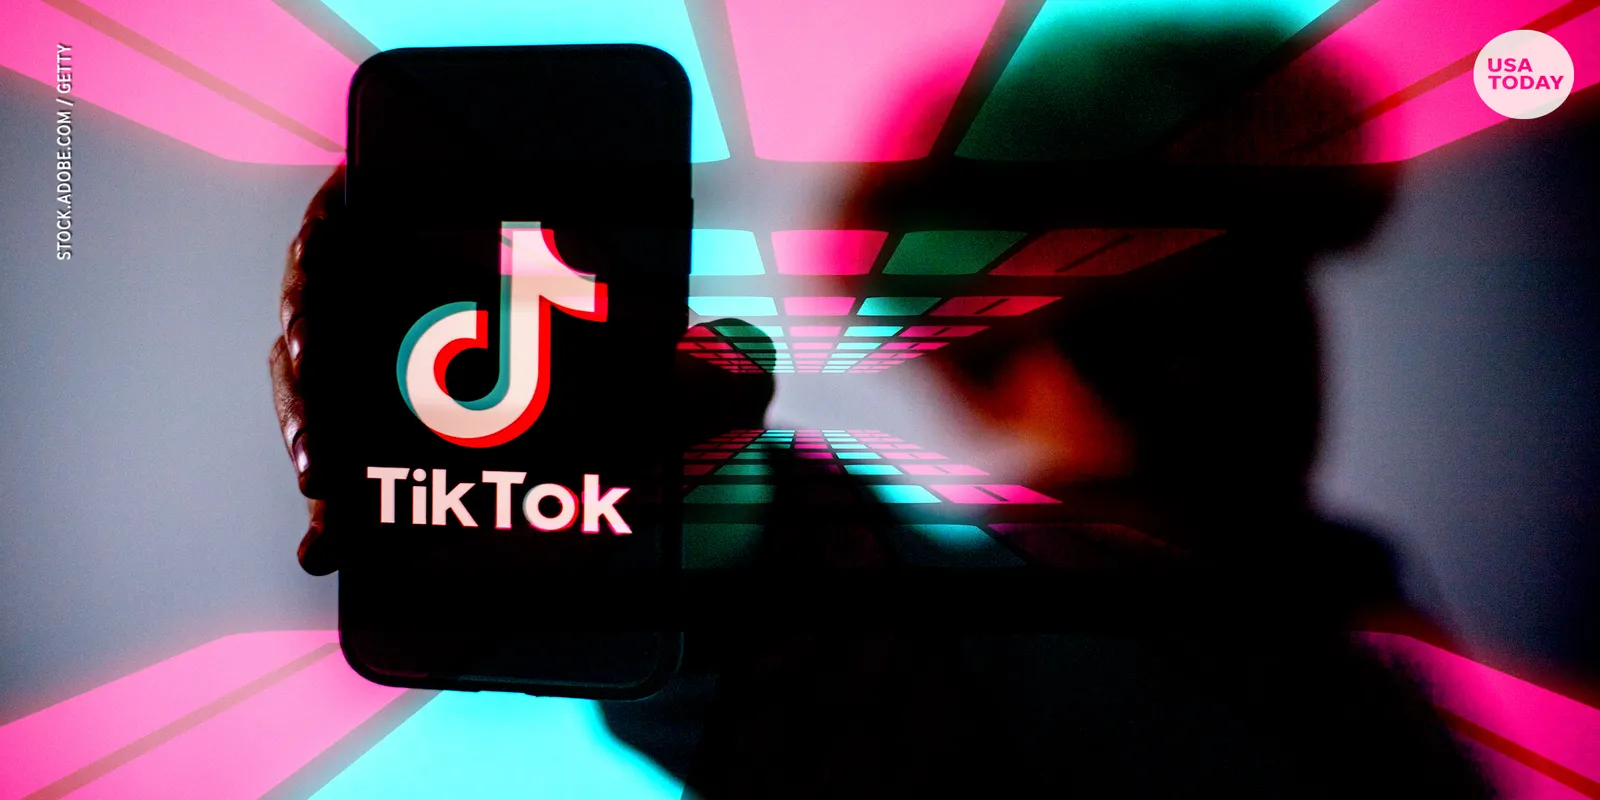 Chiến lược marketing của TikTok